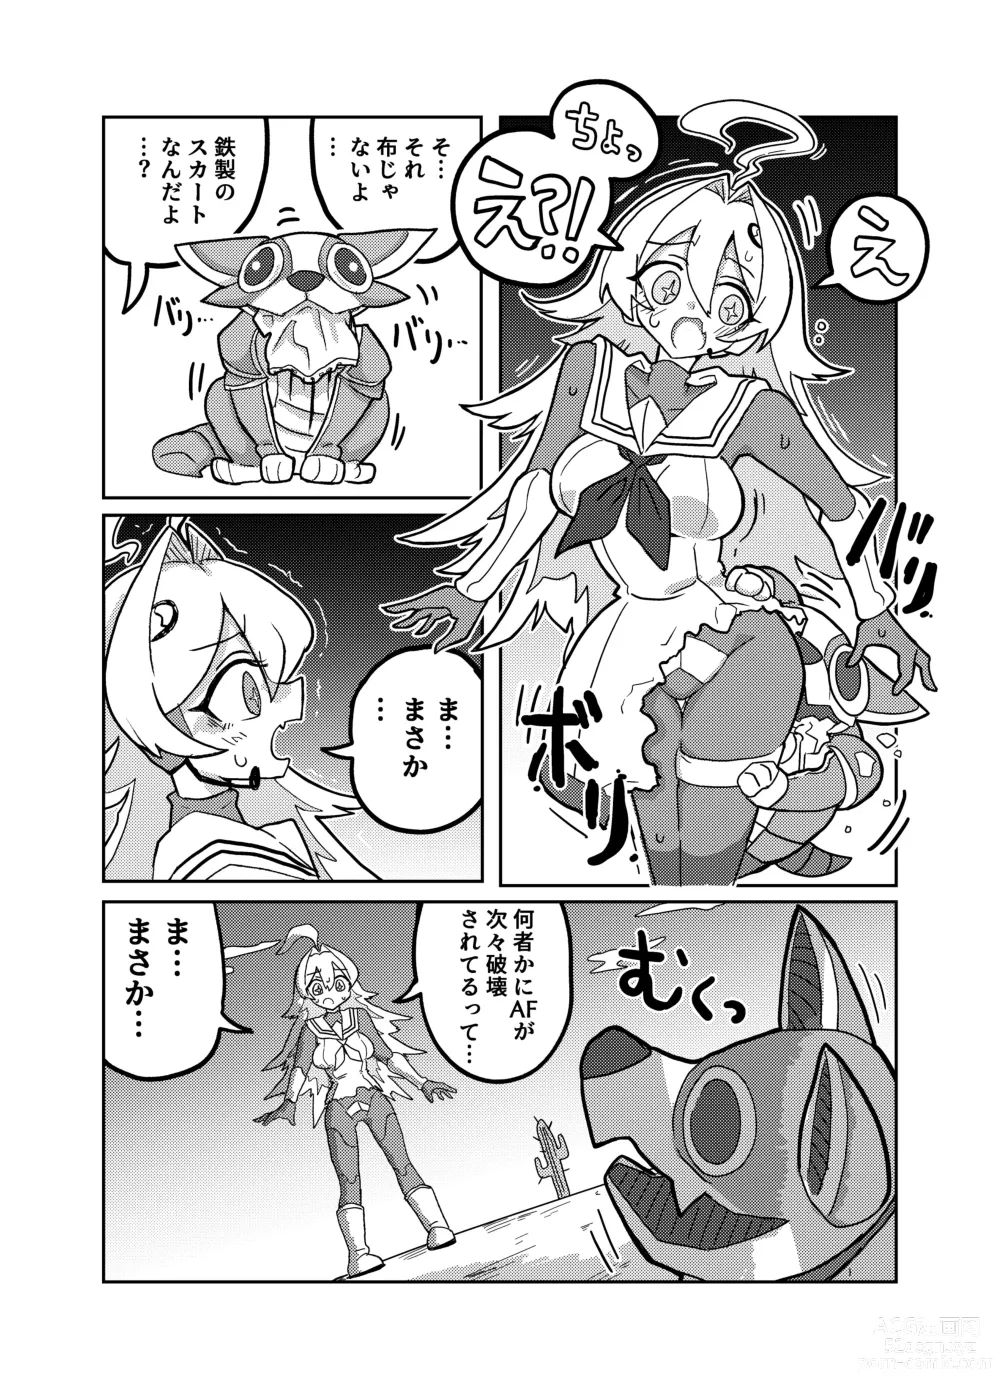 Page 9 of doujinshi Ralmia vs Robopup